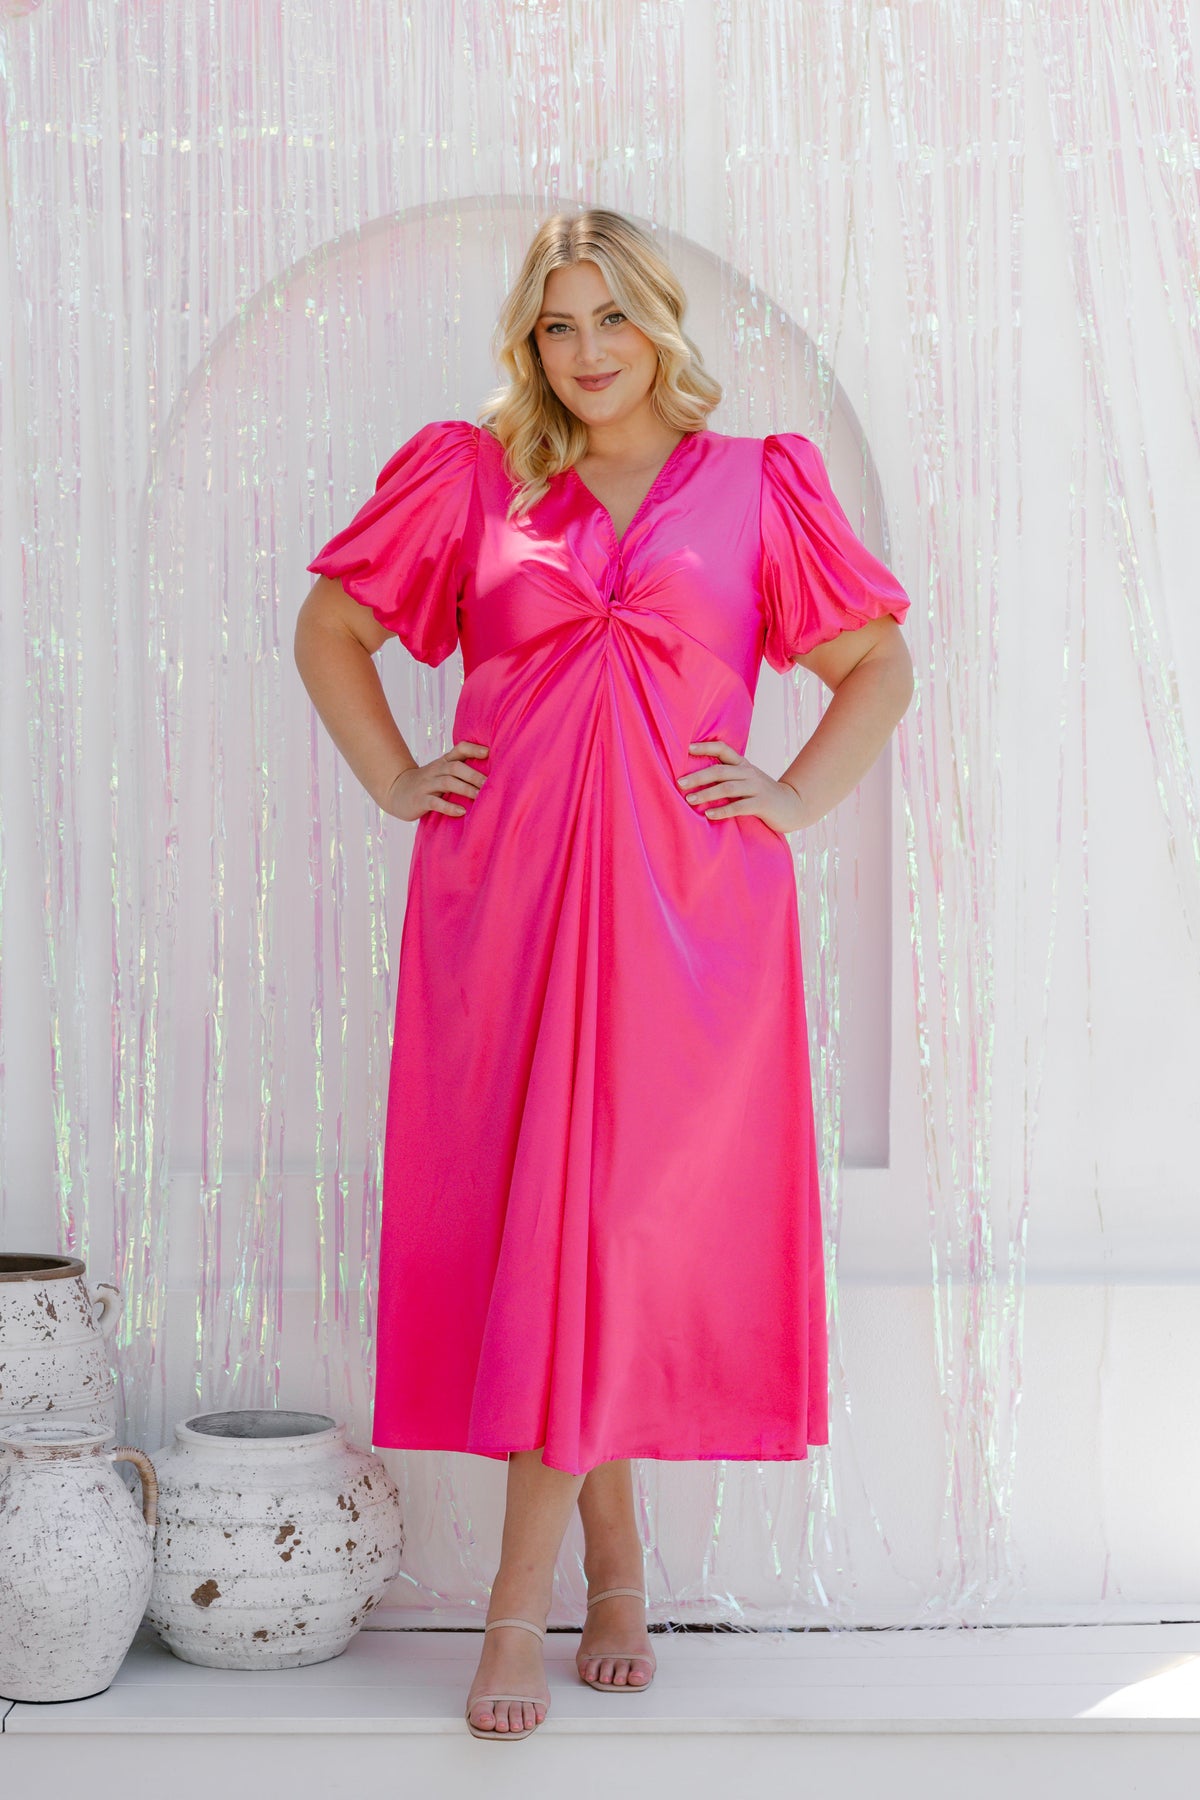 Venice Hot Pink Satin Dress – Proud Poppy Clothing